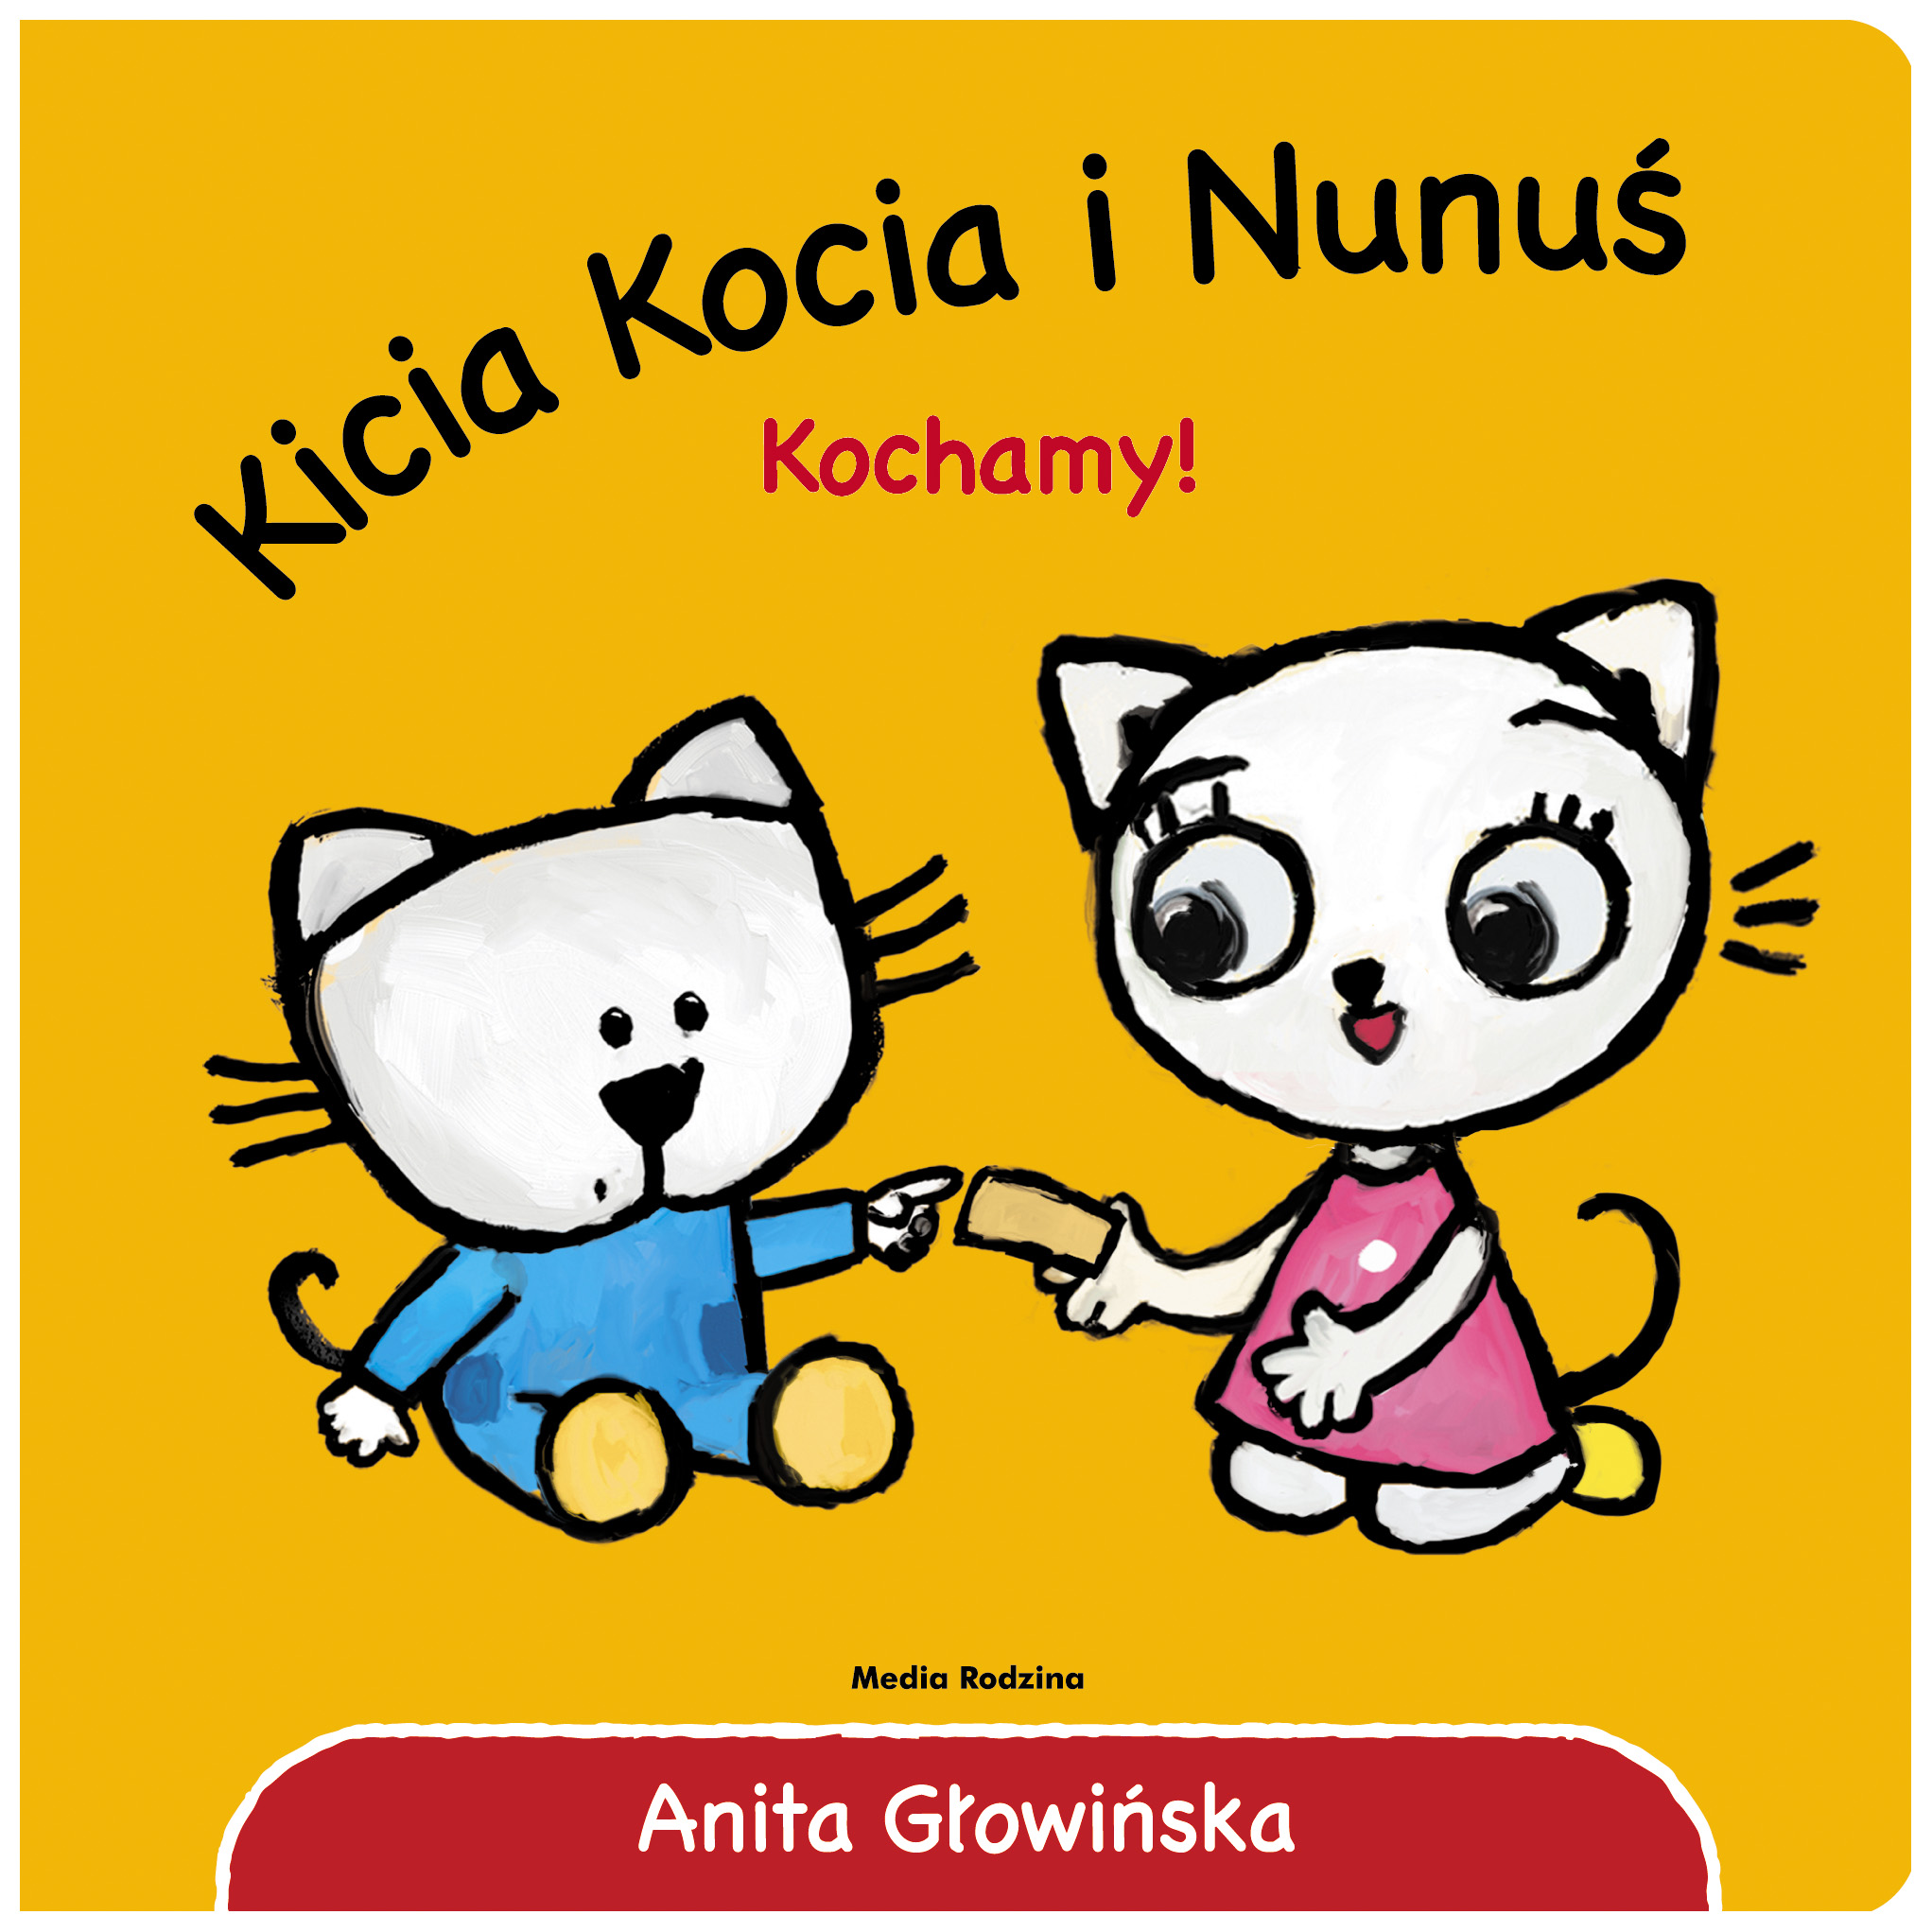 Kicia Kocia I Nunuś Kochamy, Anita Głowińska